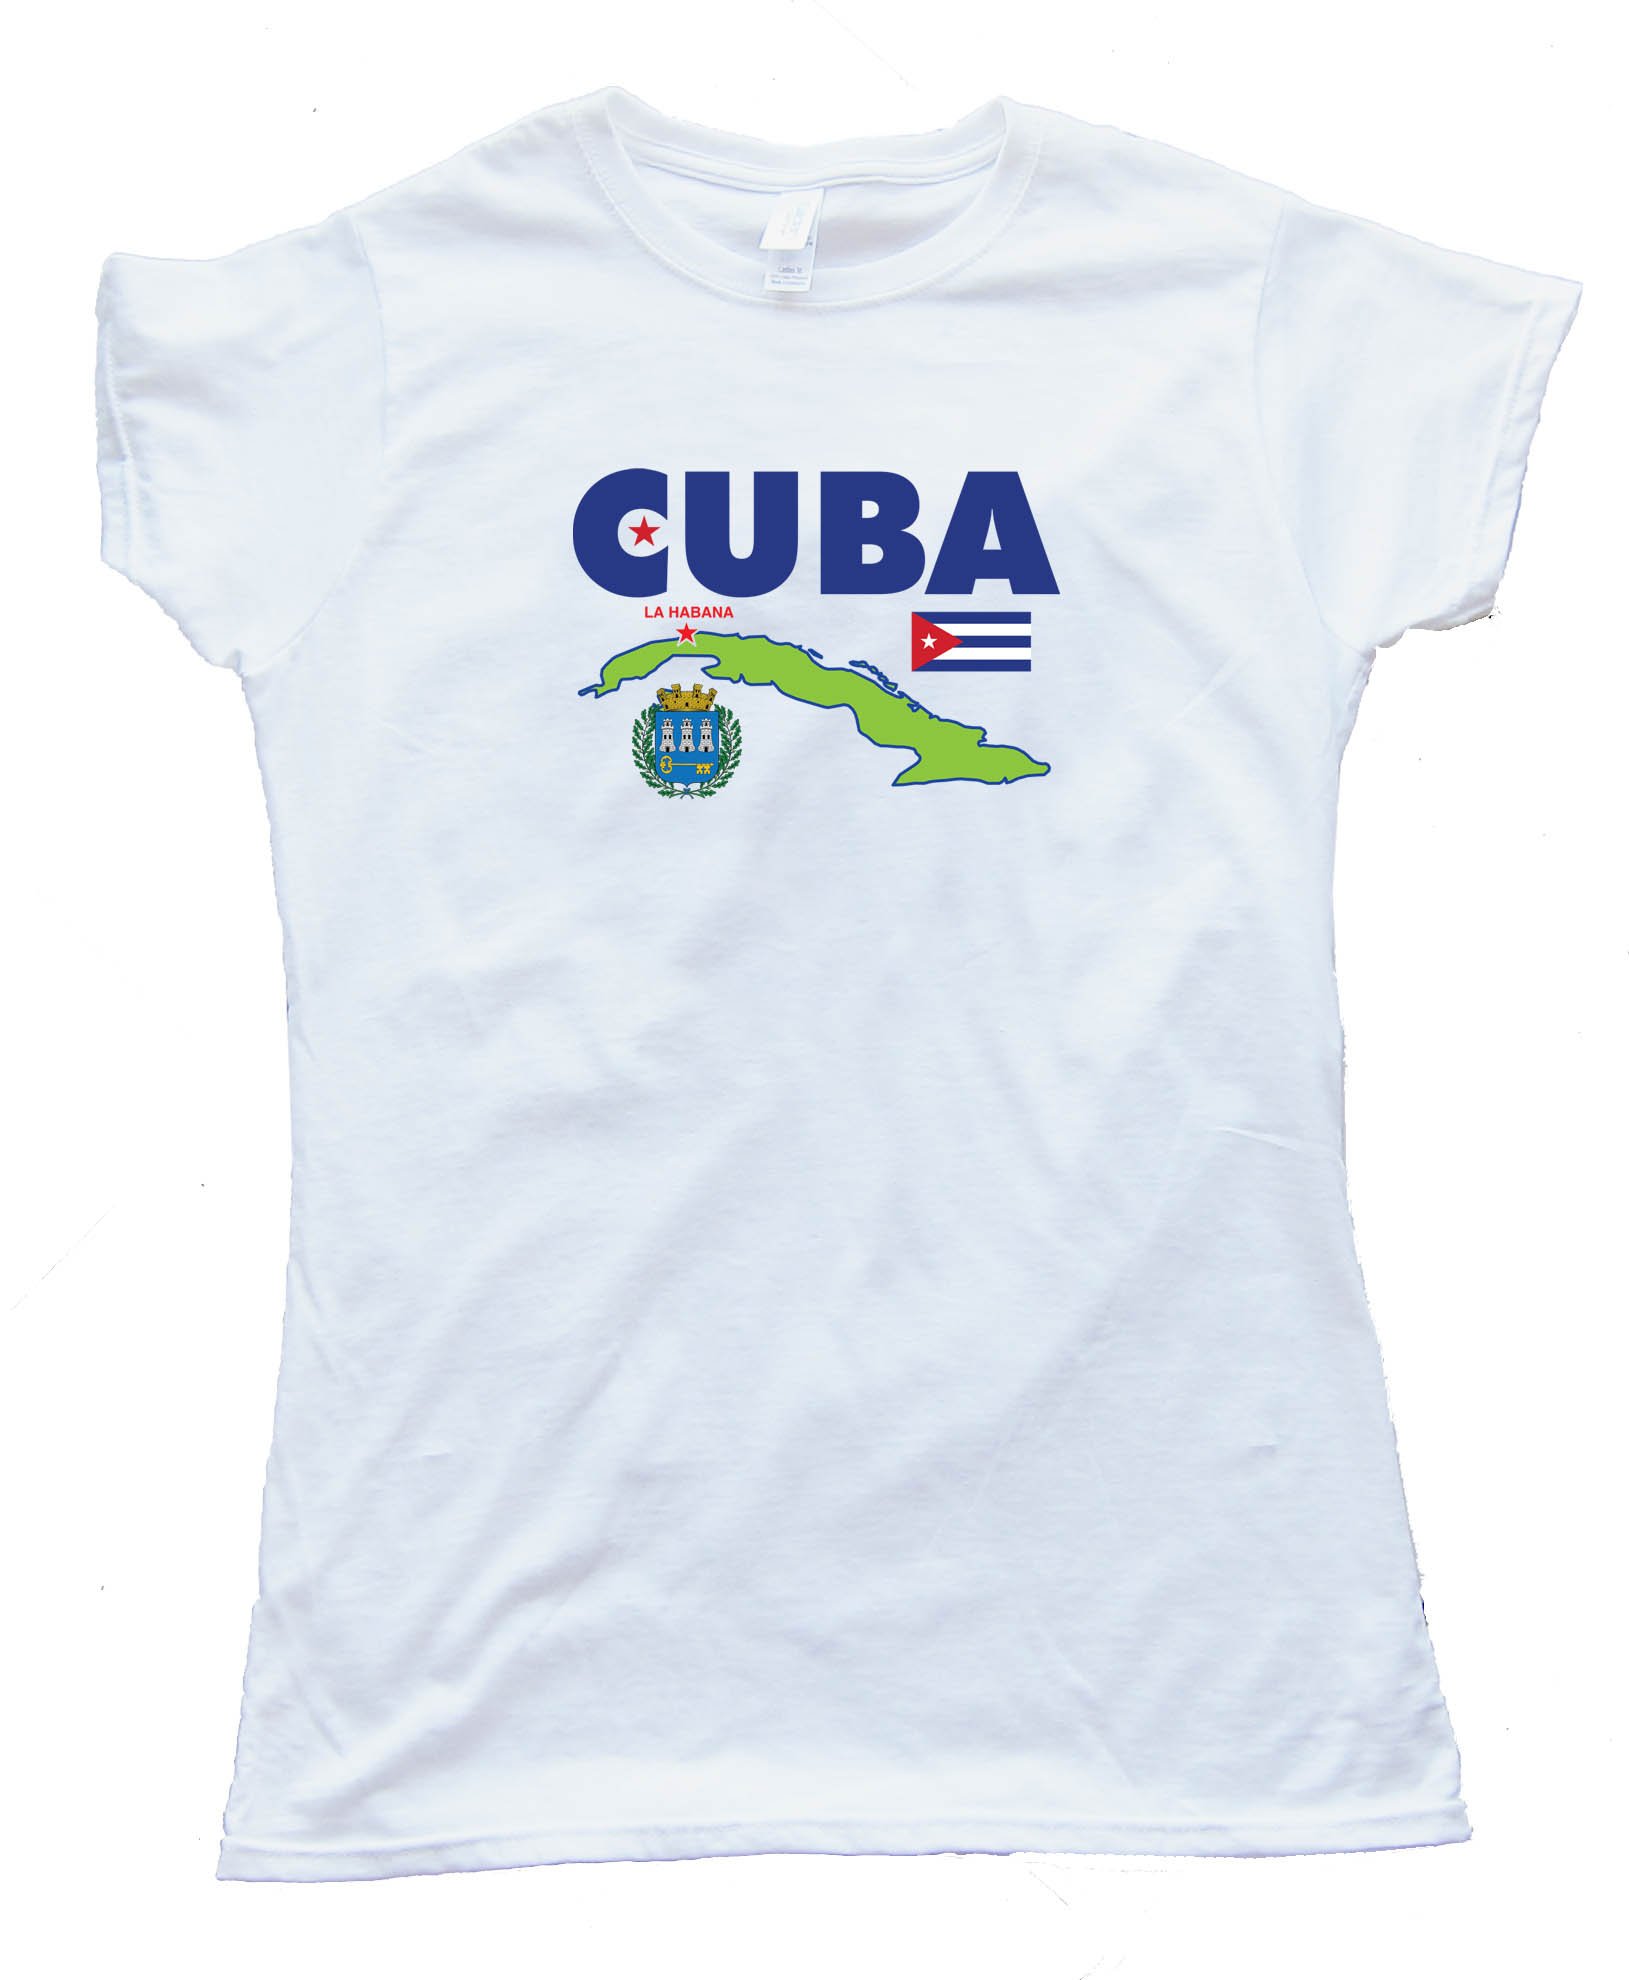 Womens Cuba La Habana Havana Country - Tee Shirt